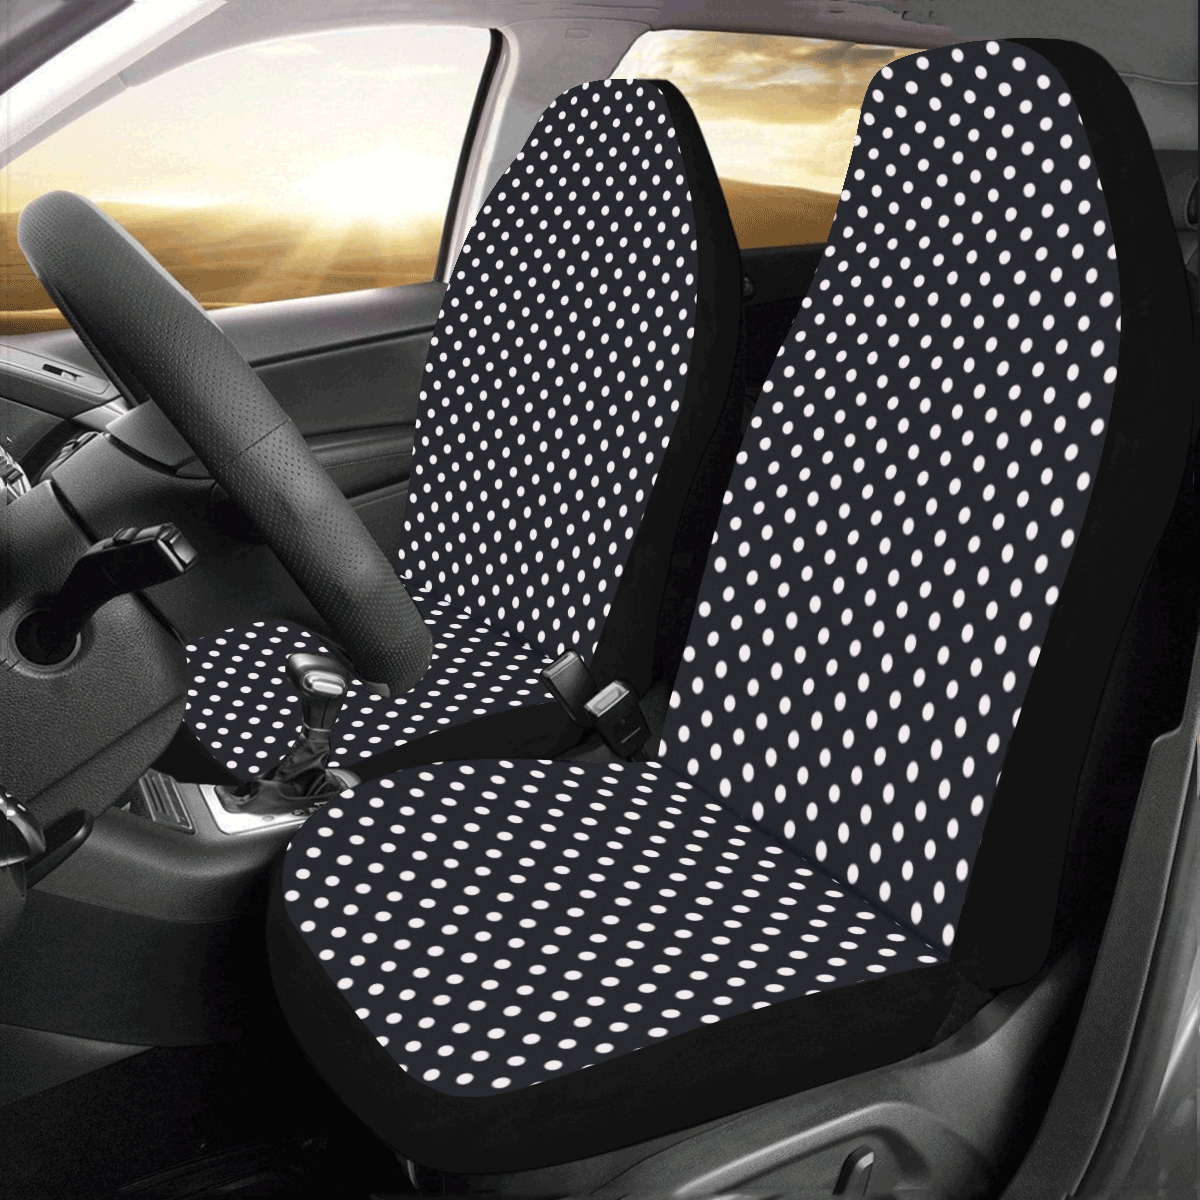 Black polka dots Car Seat Covers (Set of 2)